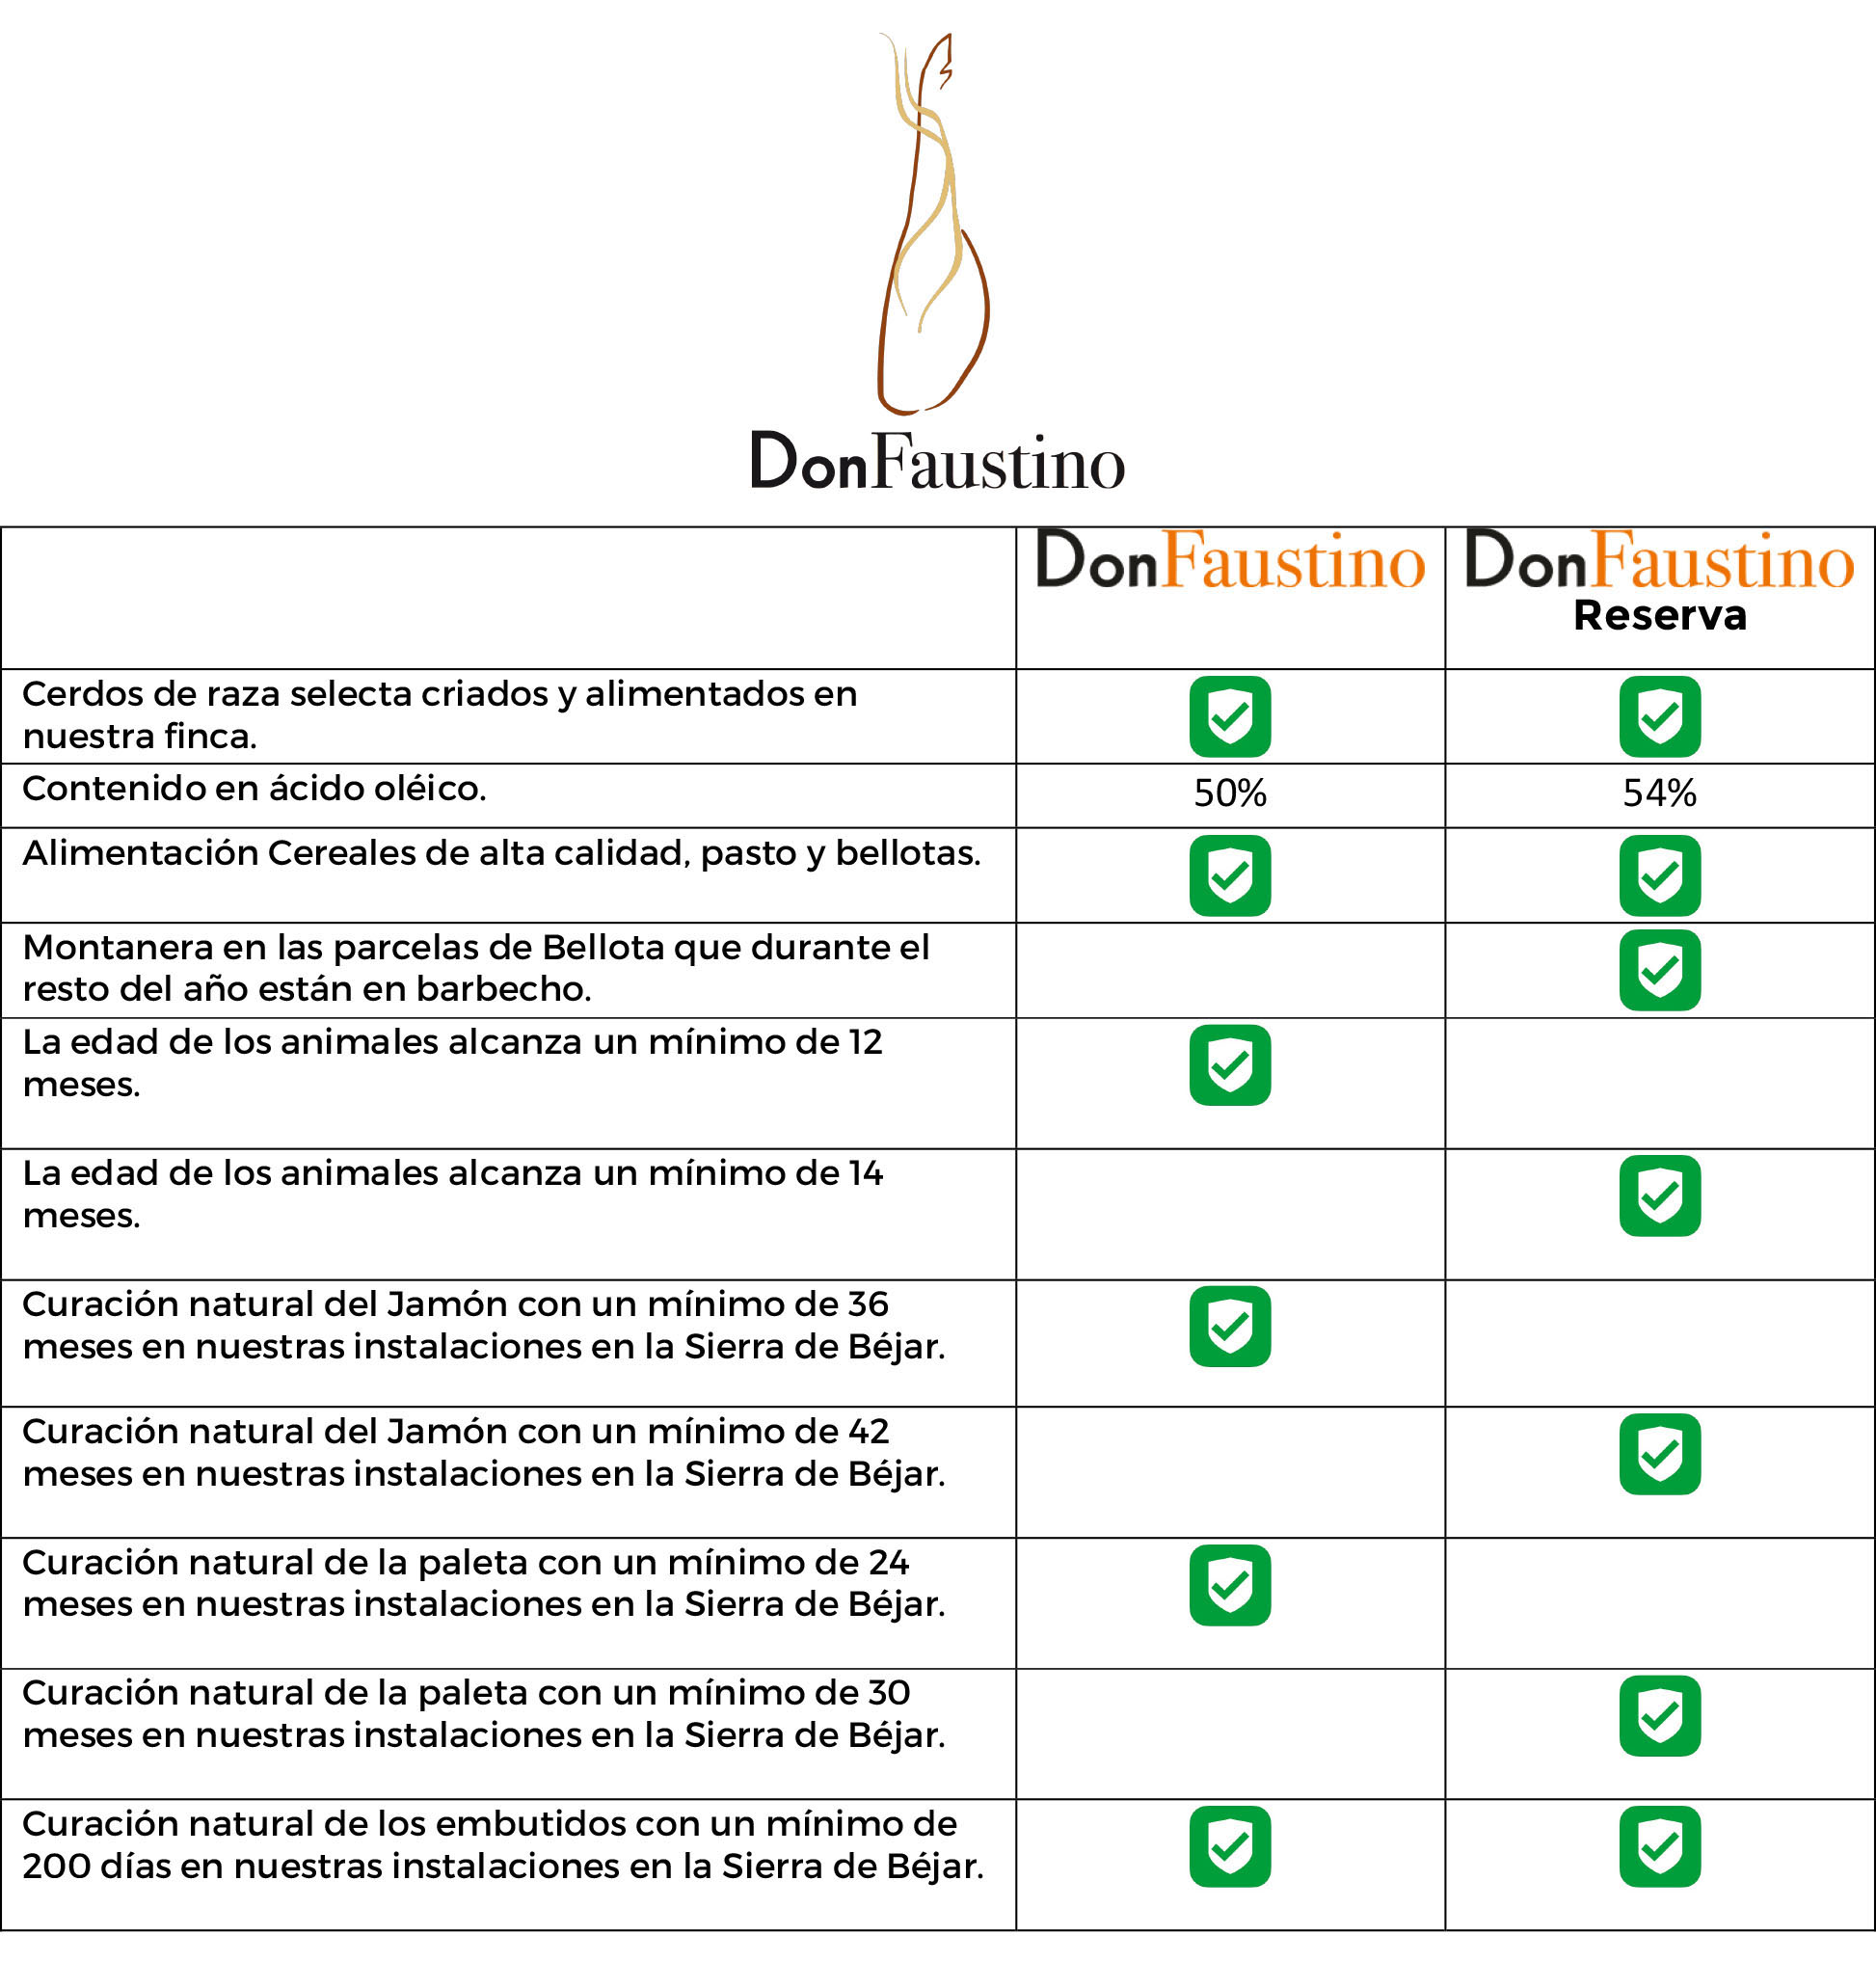 Diferencias entre la gama «Don Faustino» y «Don Faustino Reserva»